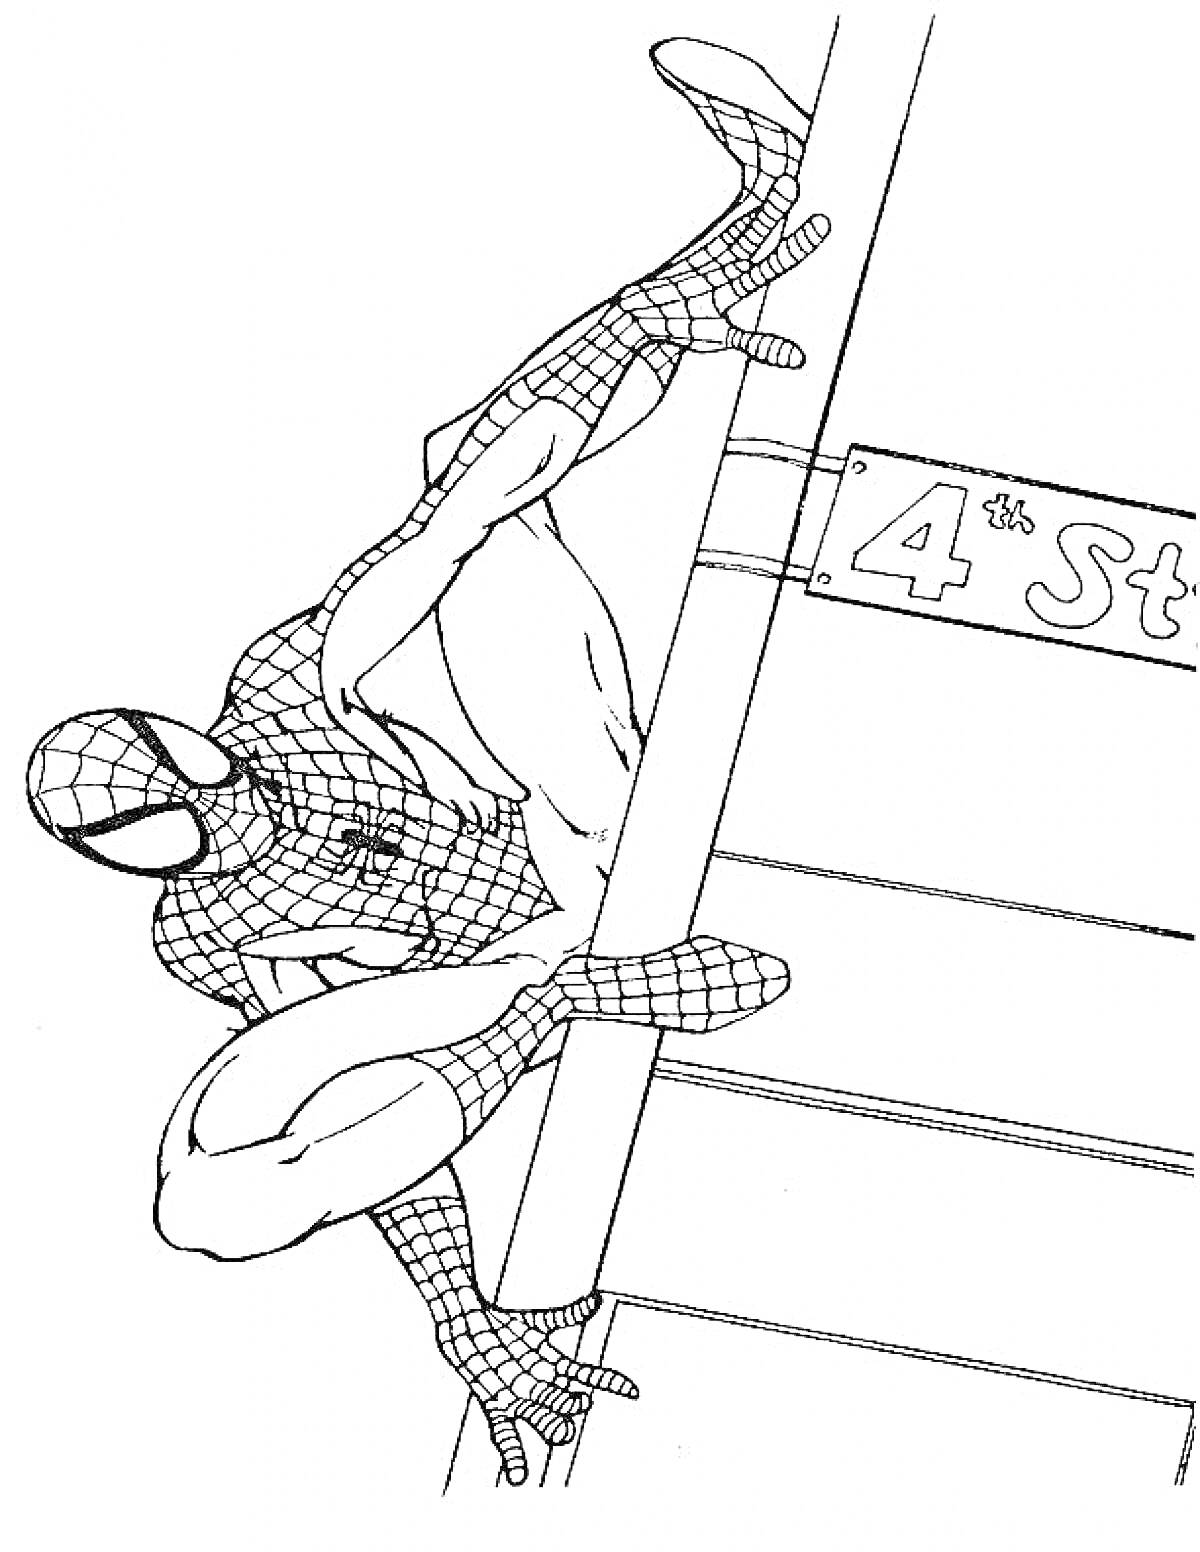 Раскраска Человек-паук на стене с табличкой улицы 4th St.